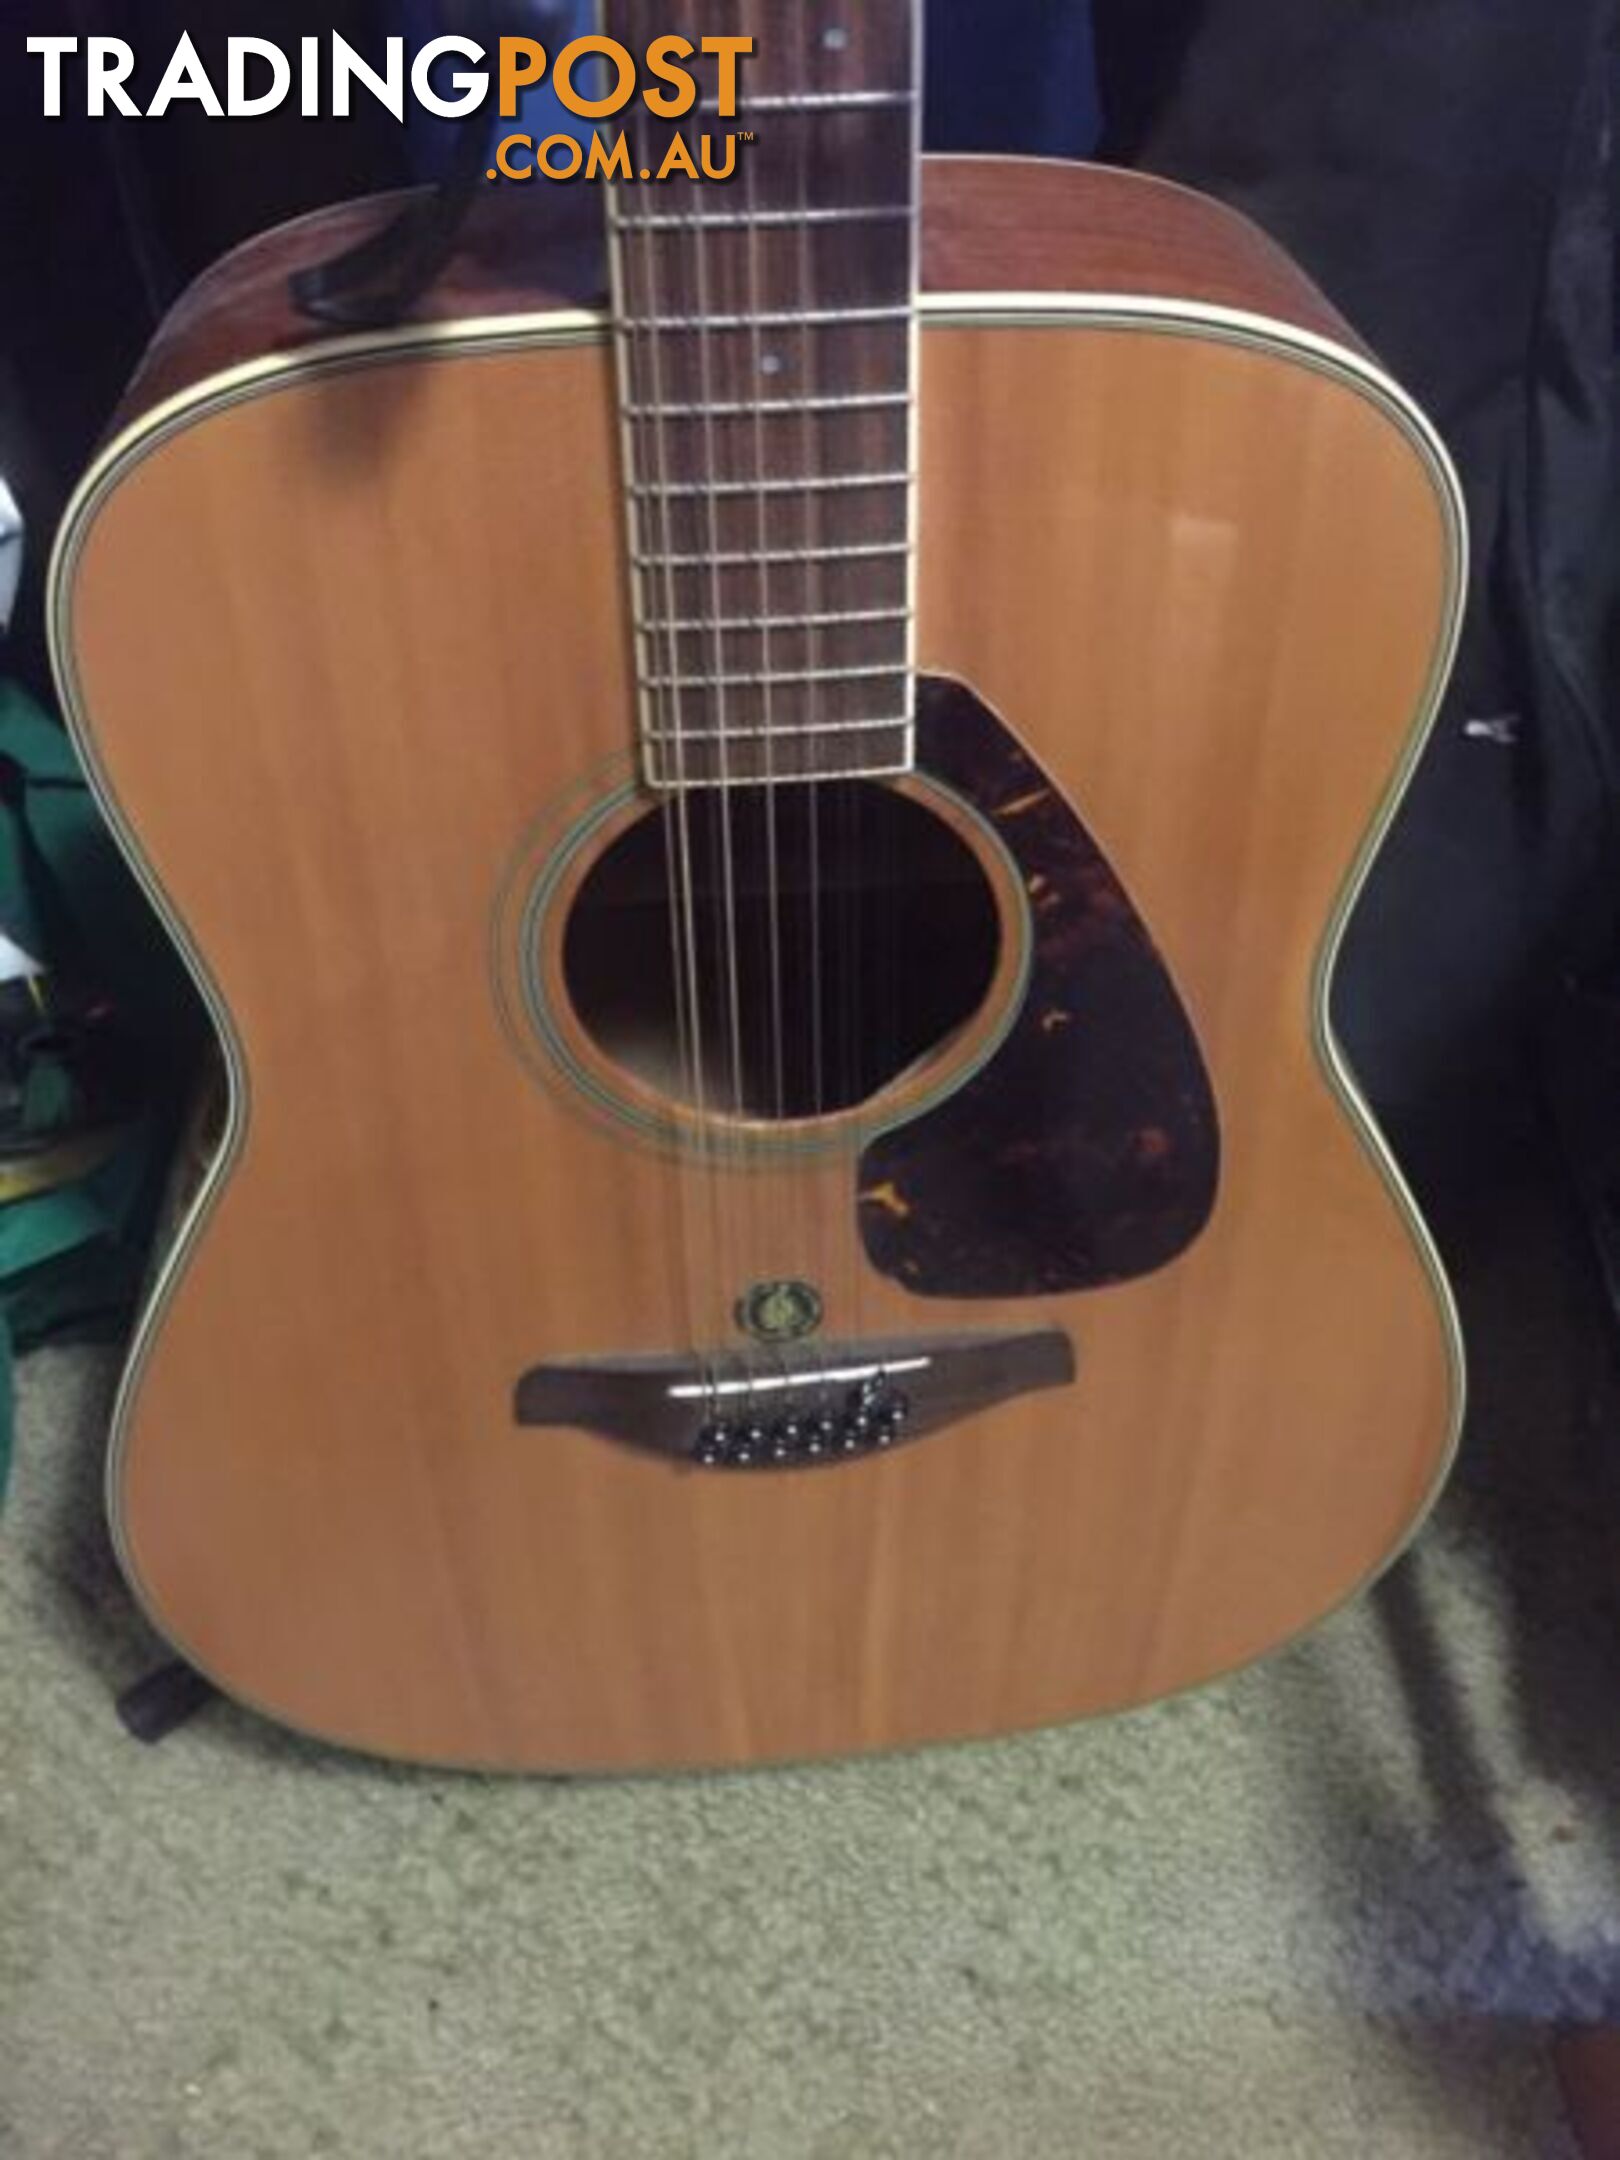 Beautiful Yamaha 12 string guitar / acoustic